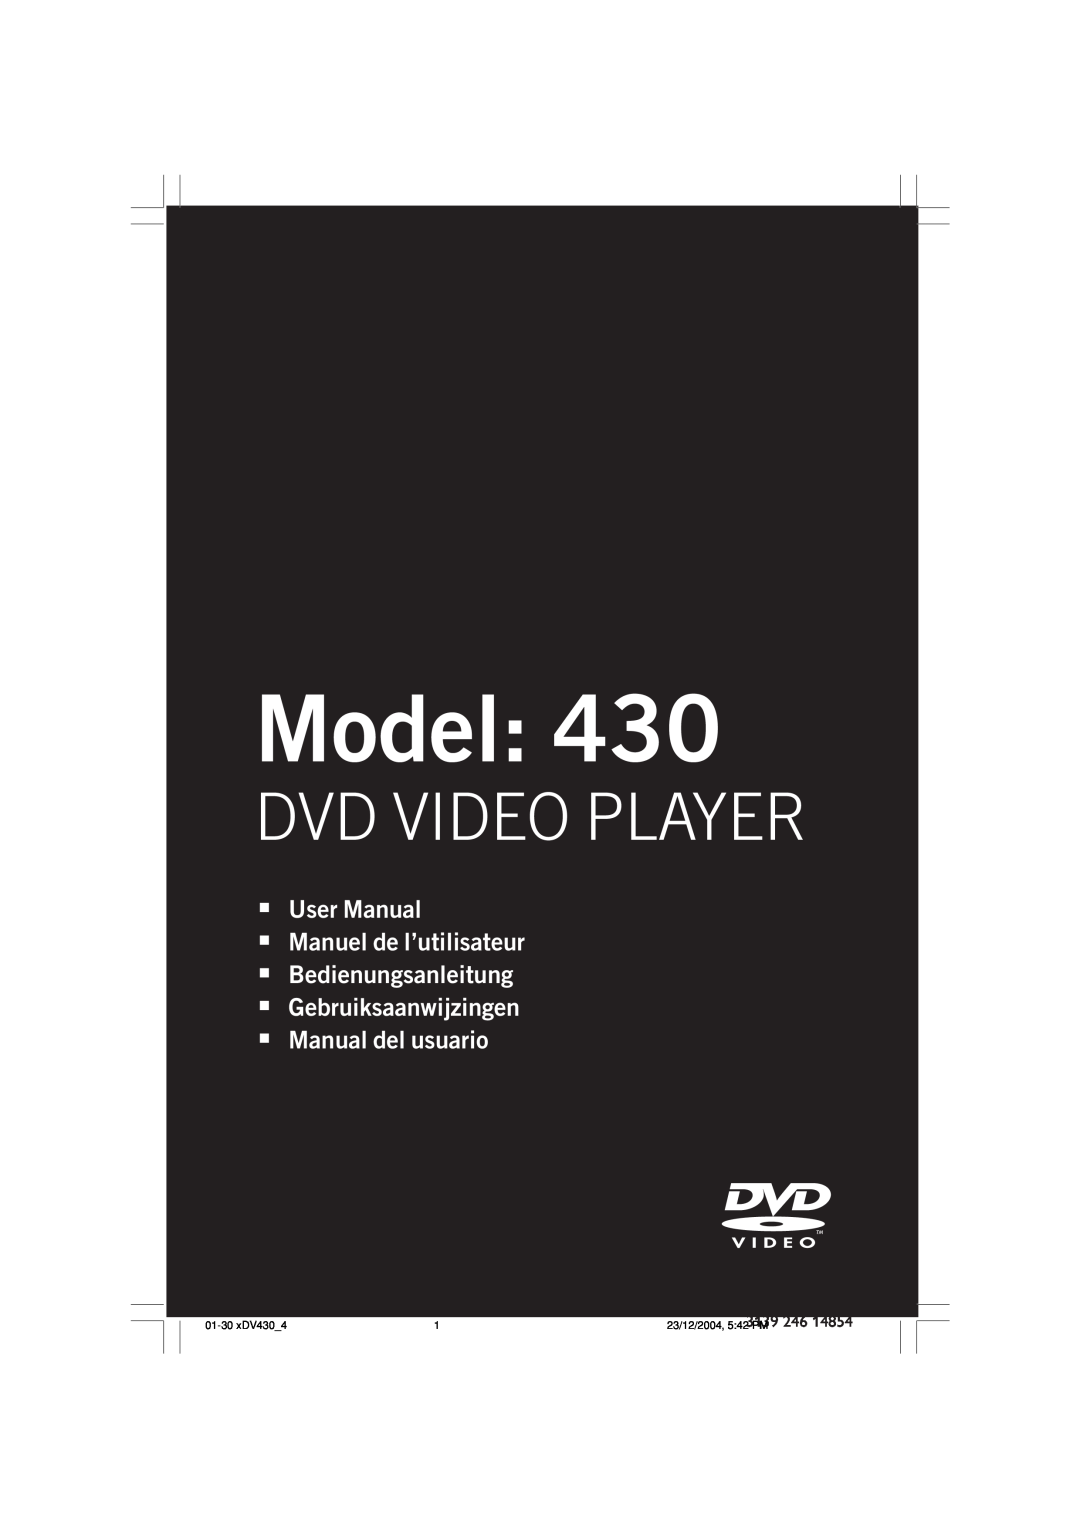 Philips MMS430 user manual Model, Dvd Video Player, 01-30xDV430 4123/12/2004, 5 42 PM 